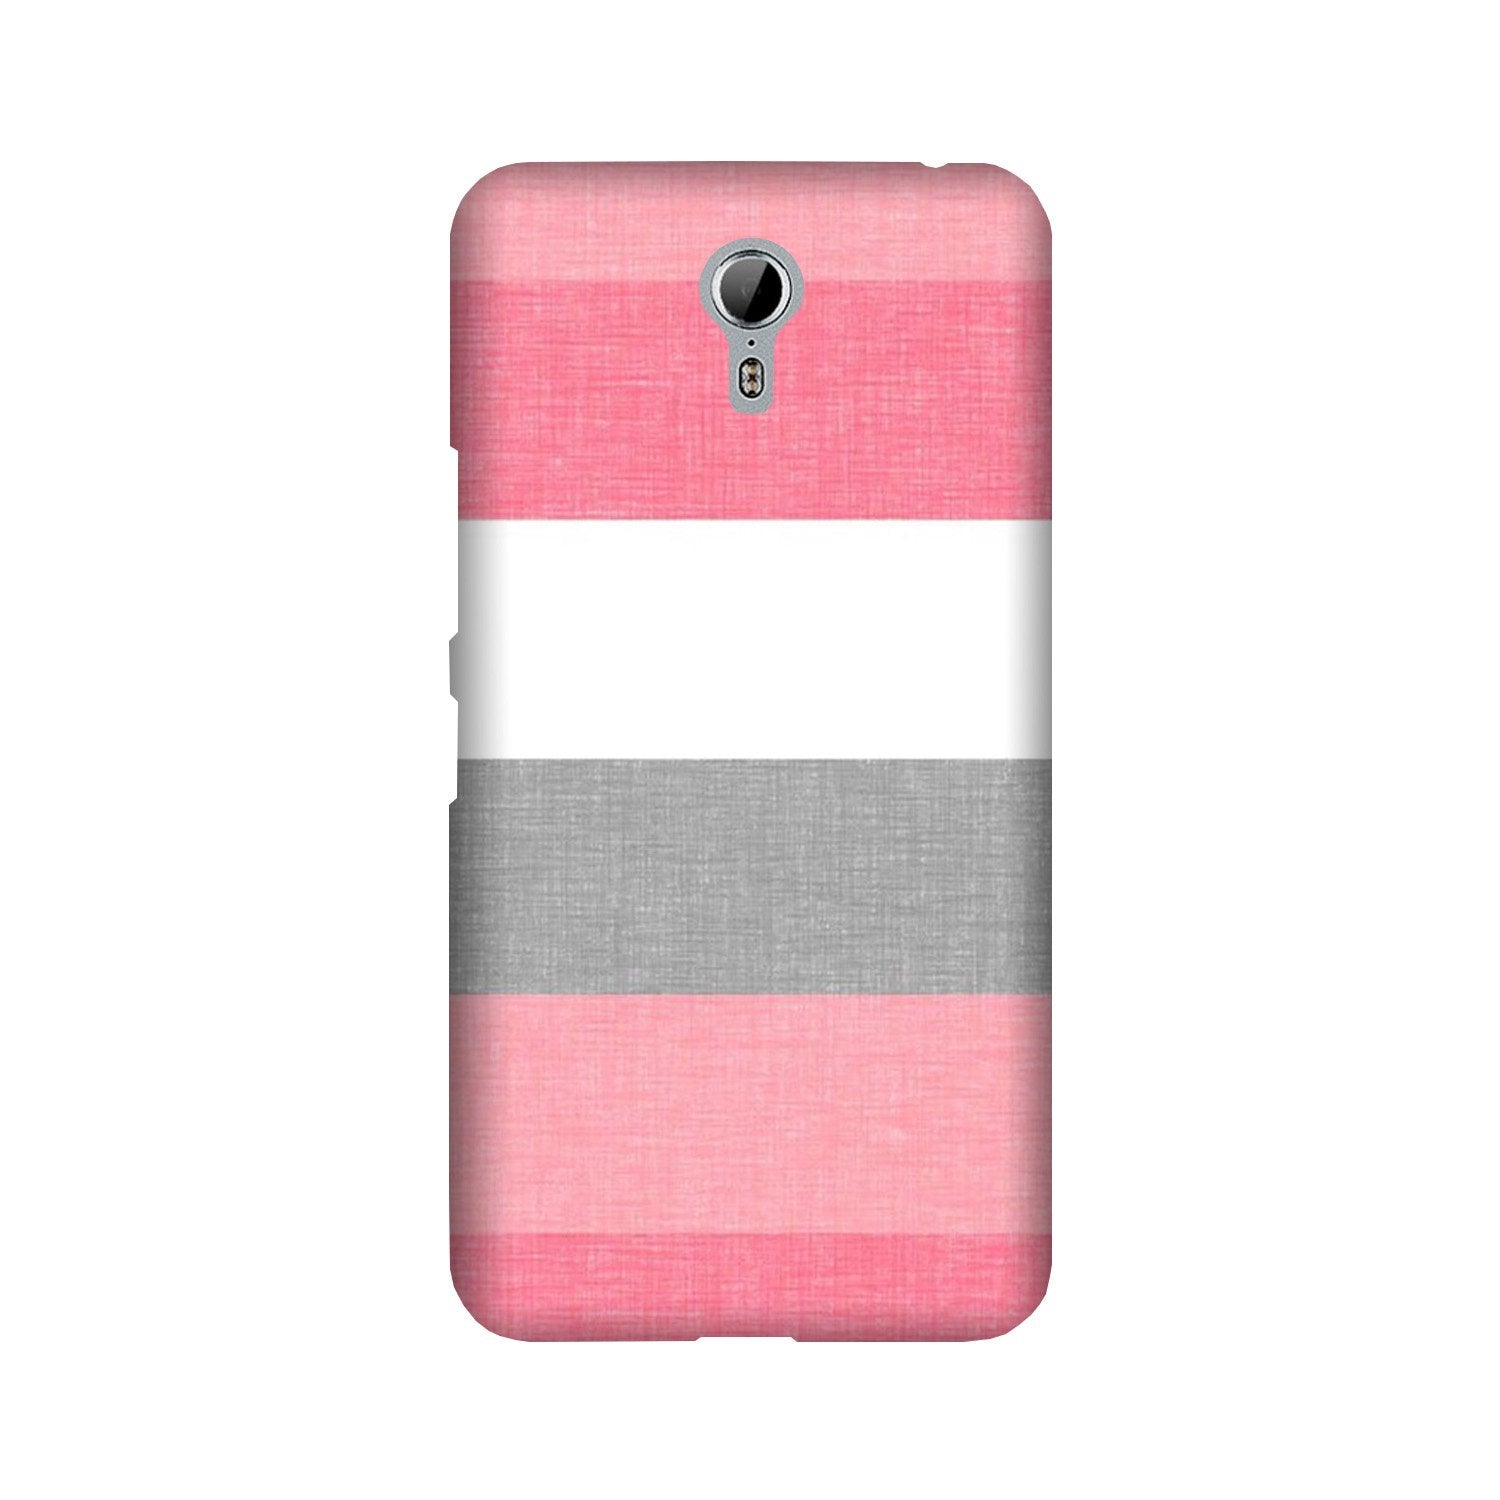 Pink white pattern Case for Lenovo Zuk Z1